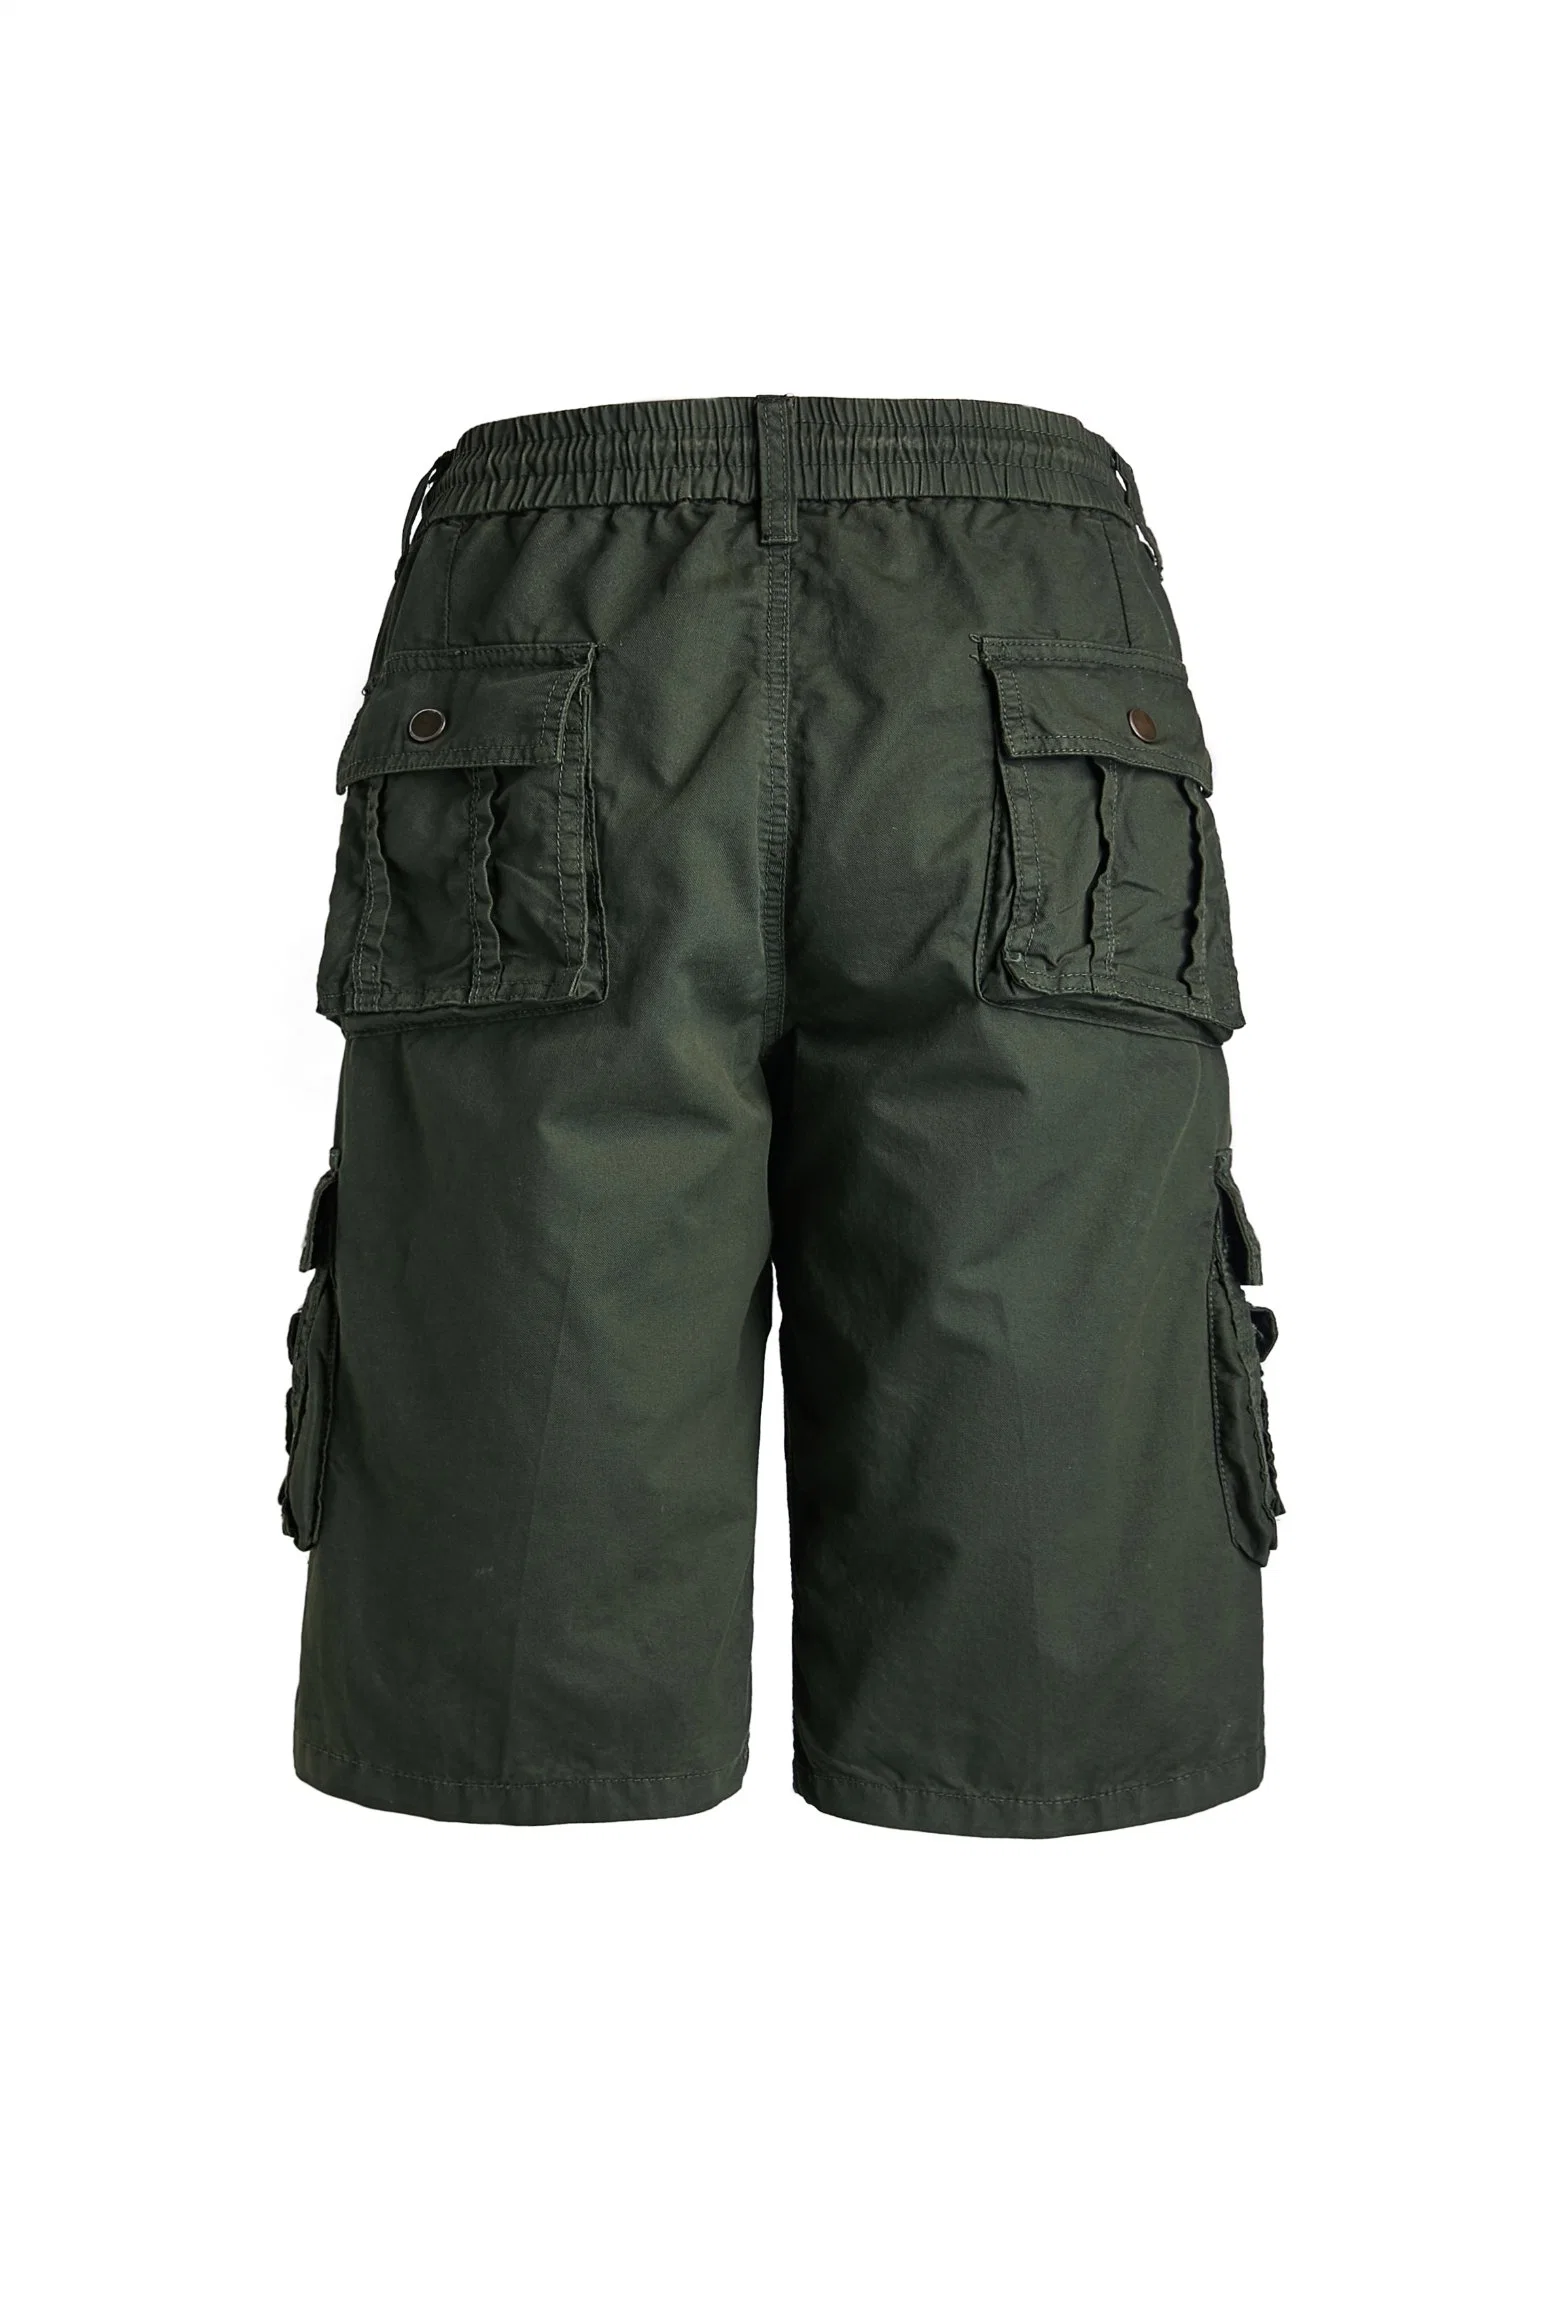 Men's Outdoor Travel Fashion Customize Cargo Shorts Leisure Apparel